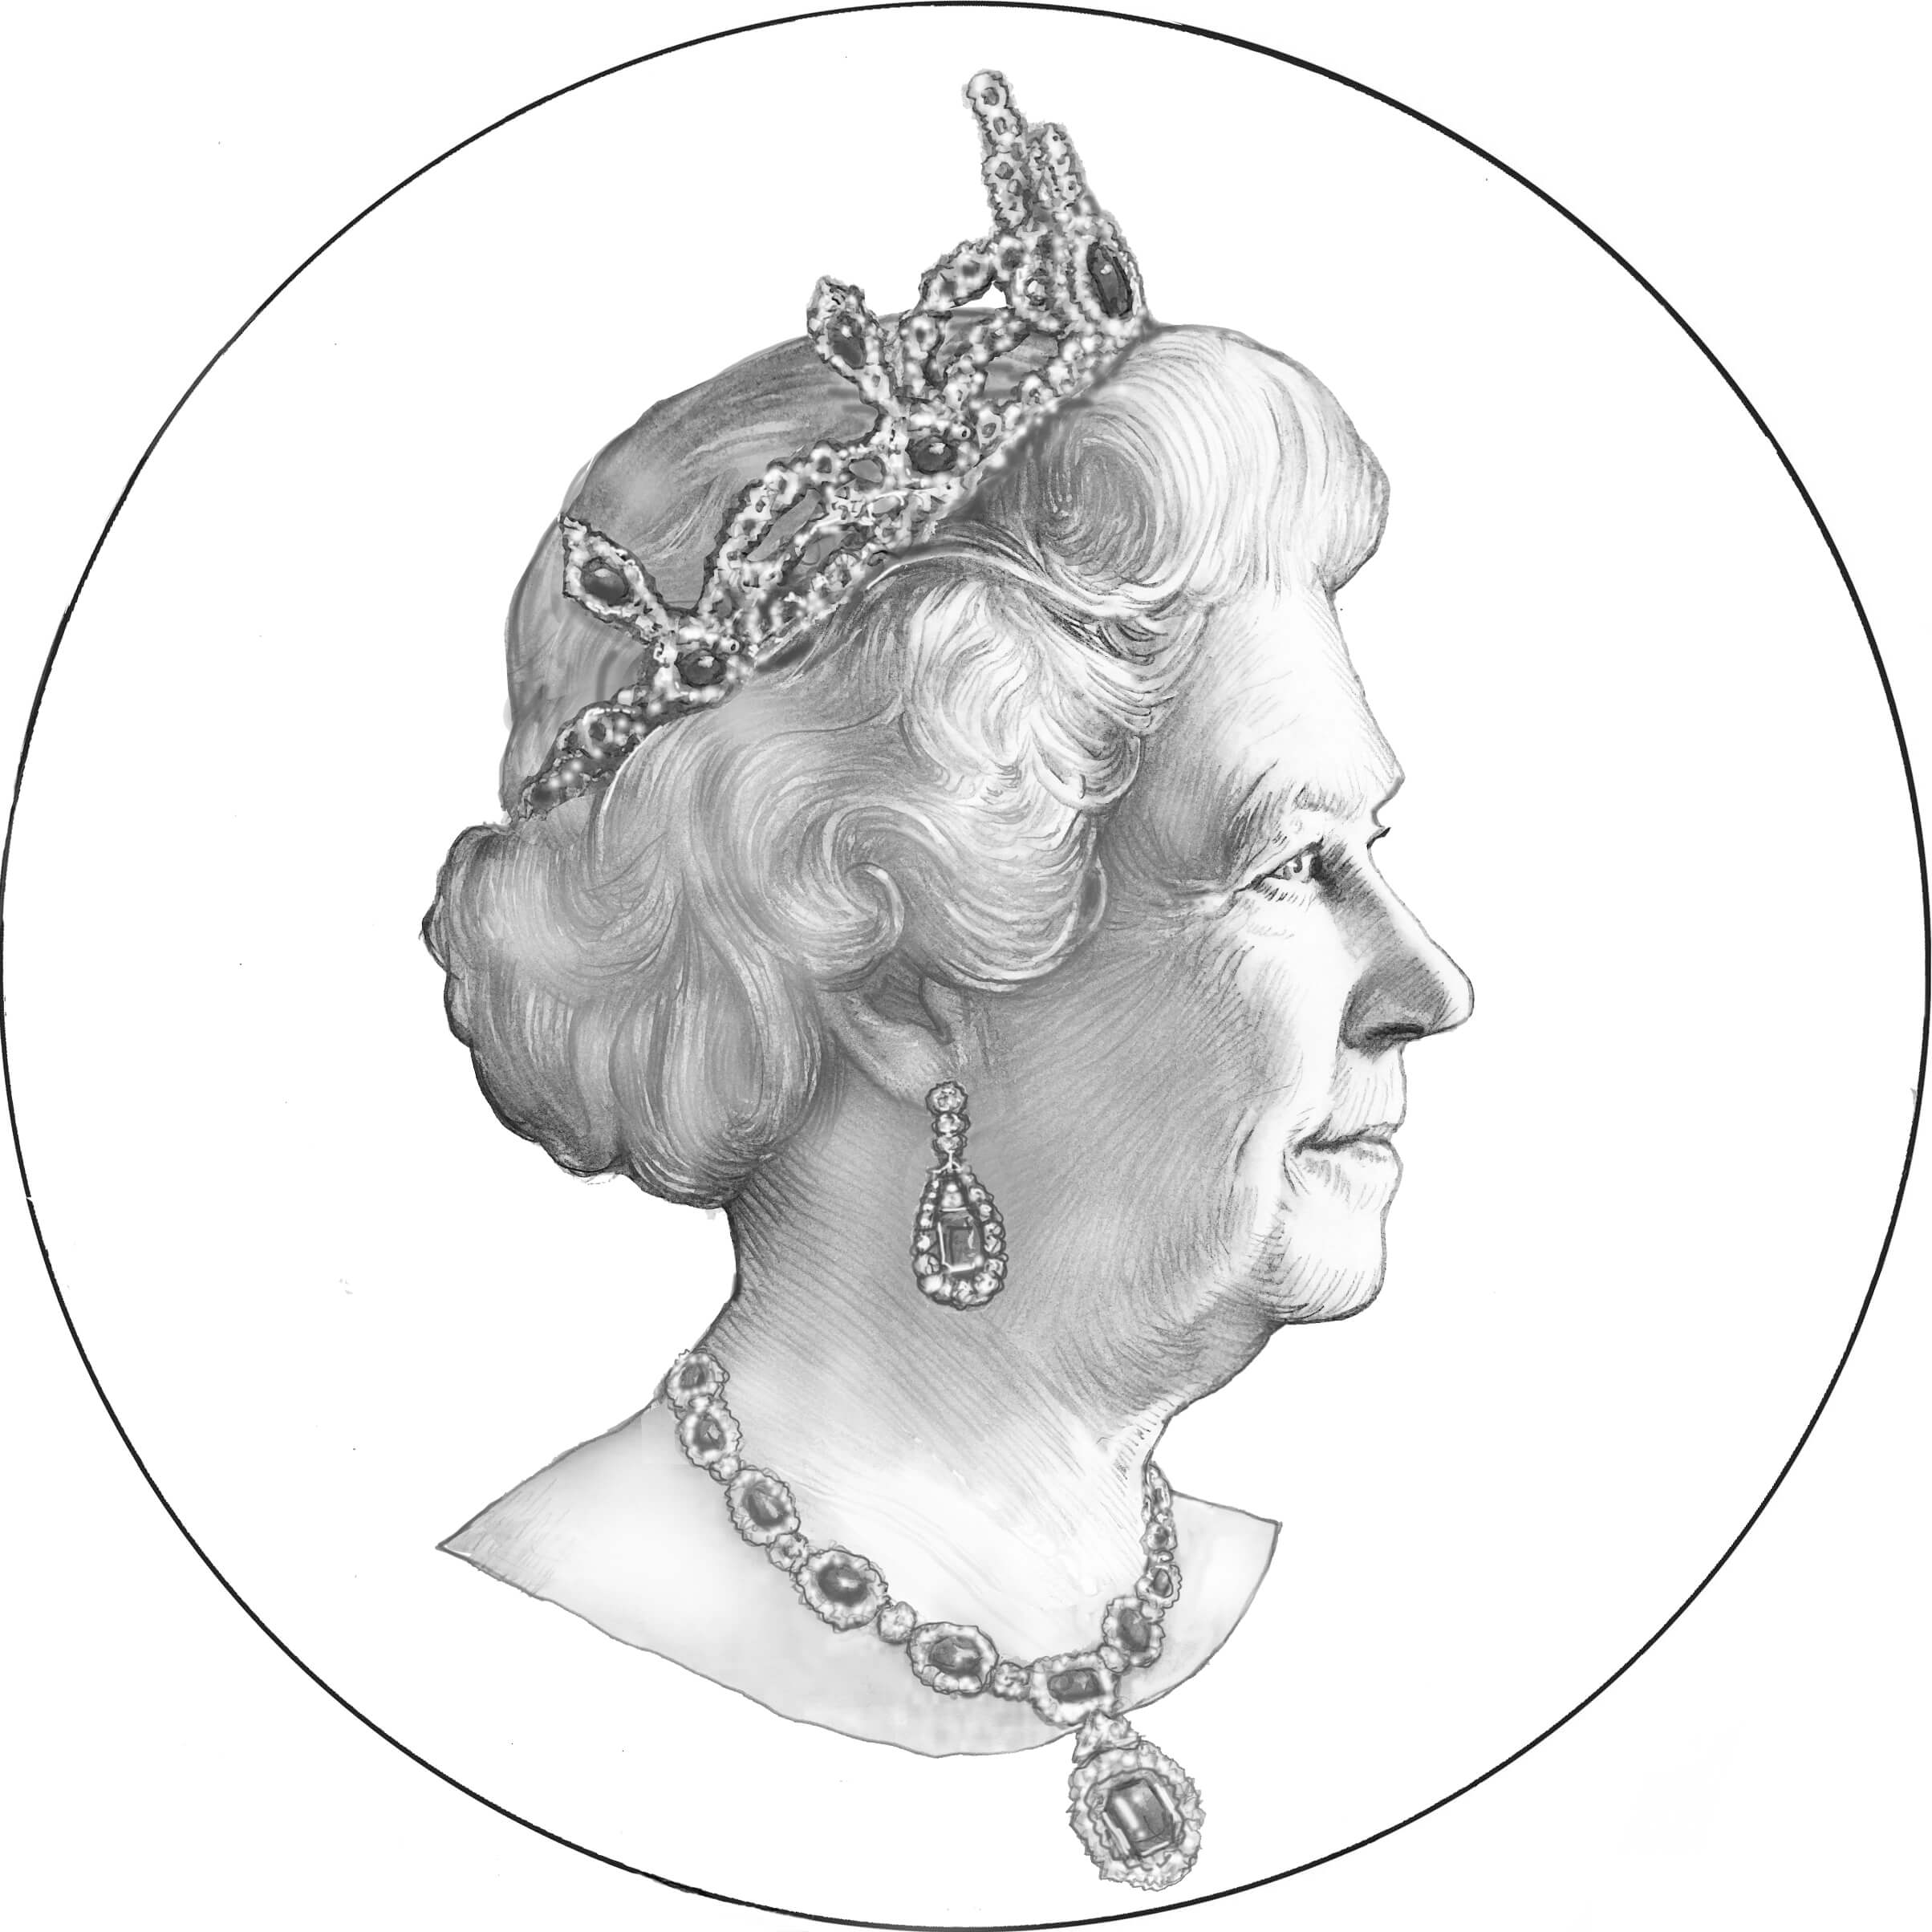 QE II 2000s  - The world's longest reigning living monarch — celebrating Queen Elizabeth II's birthday